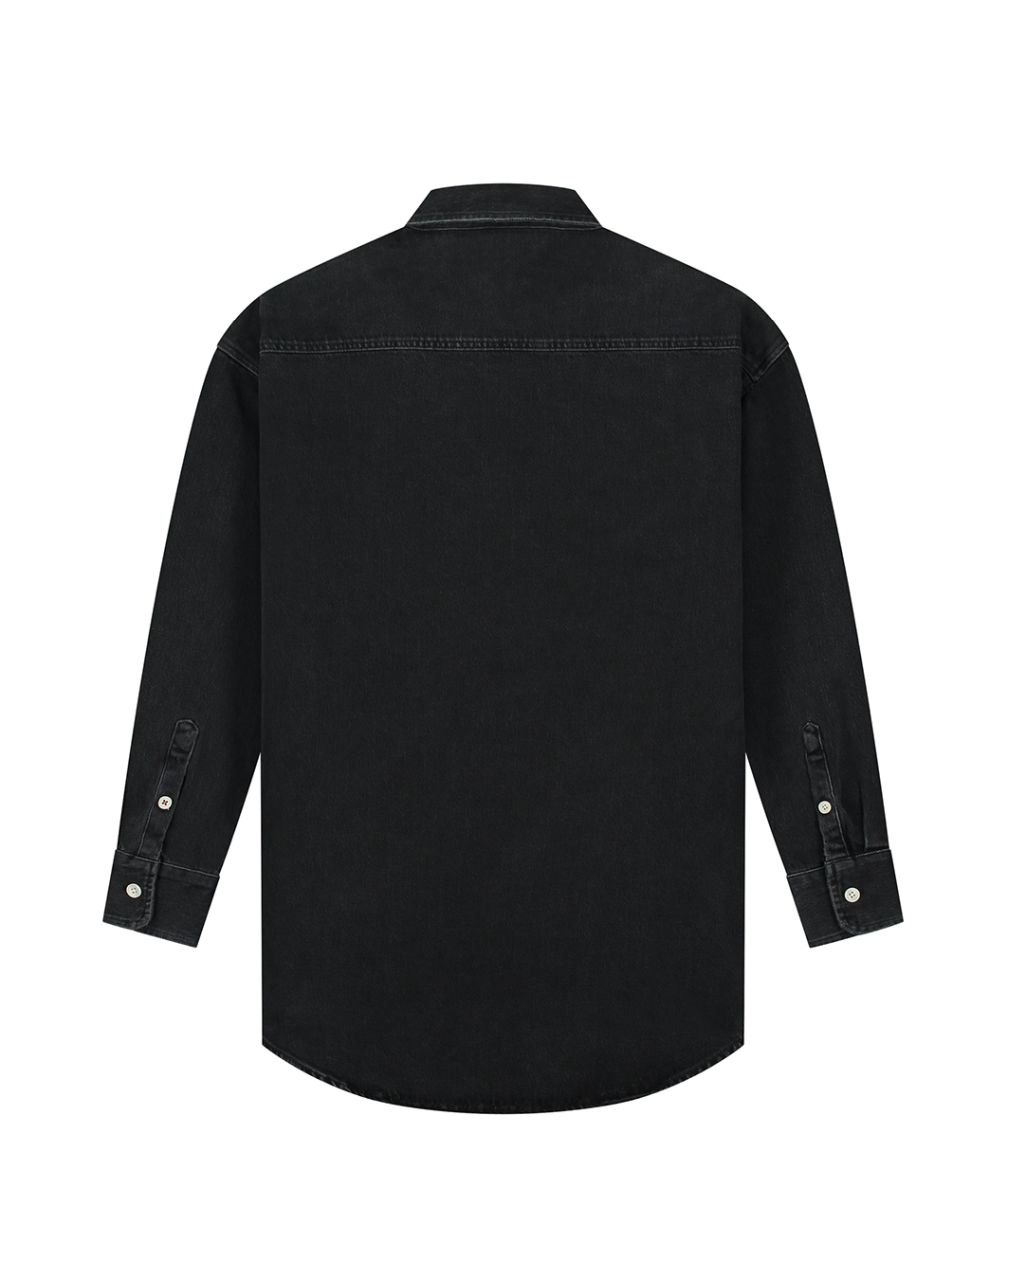 Selina Black Shirt Washed Black L